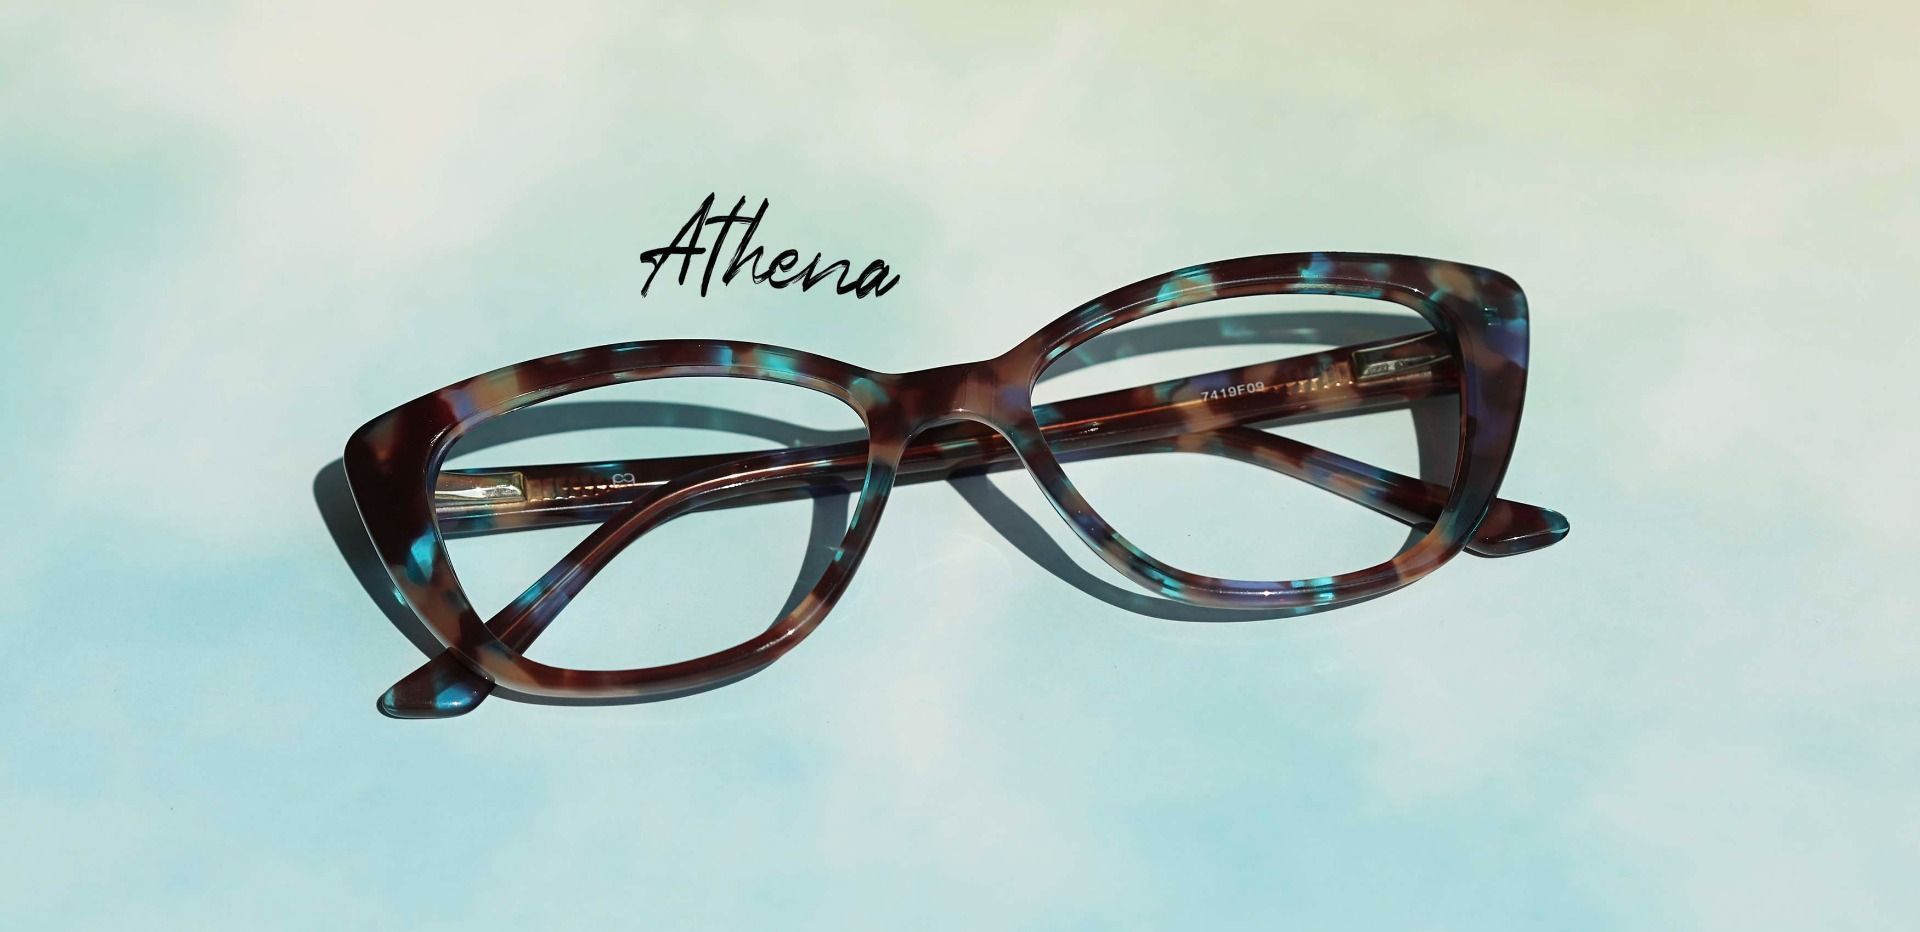 Athena Cat-Eye Reading Glasses - Floral